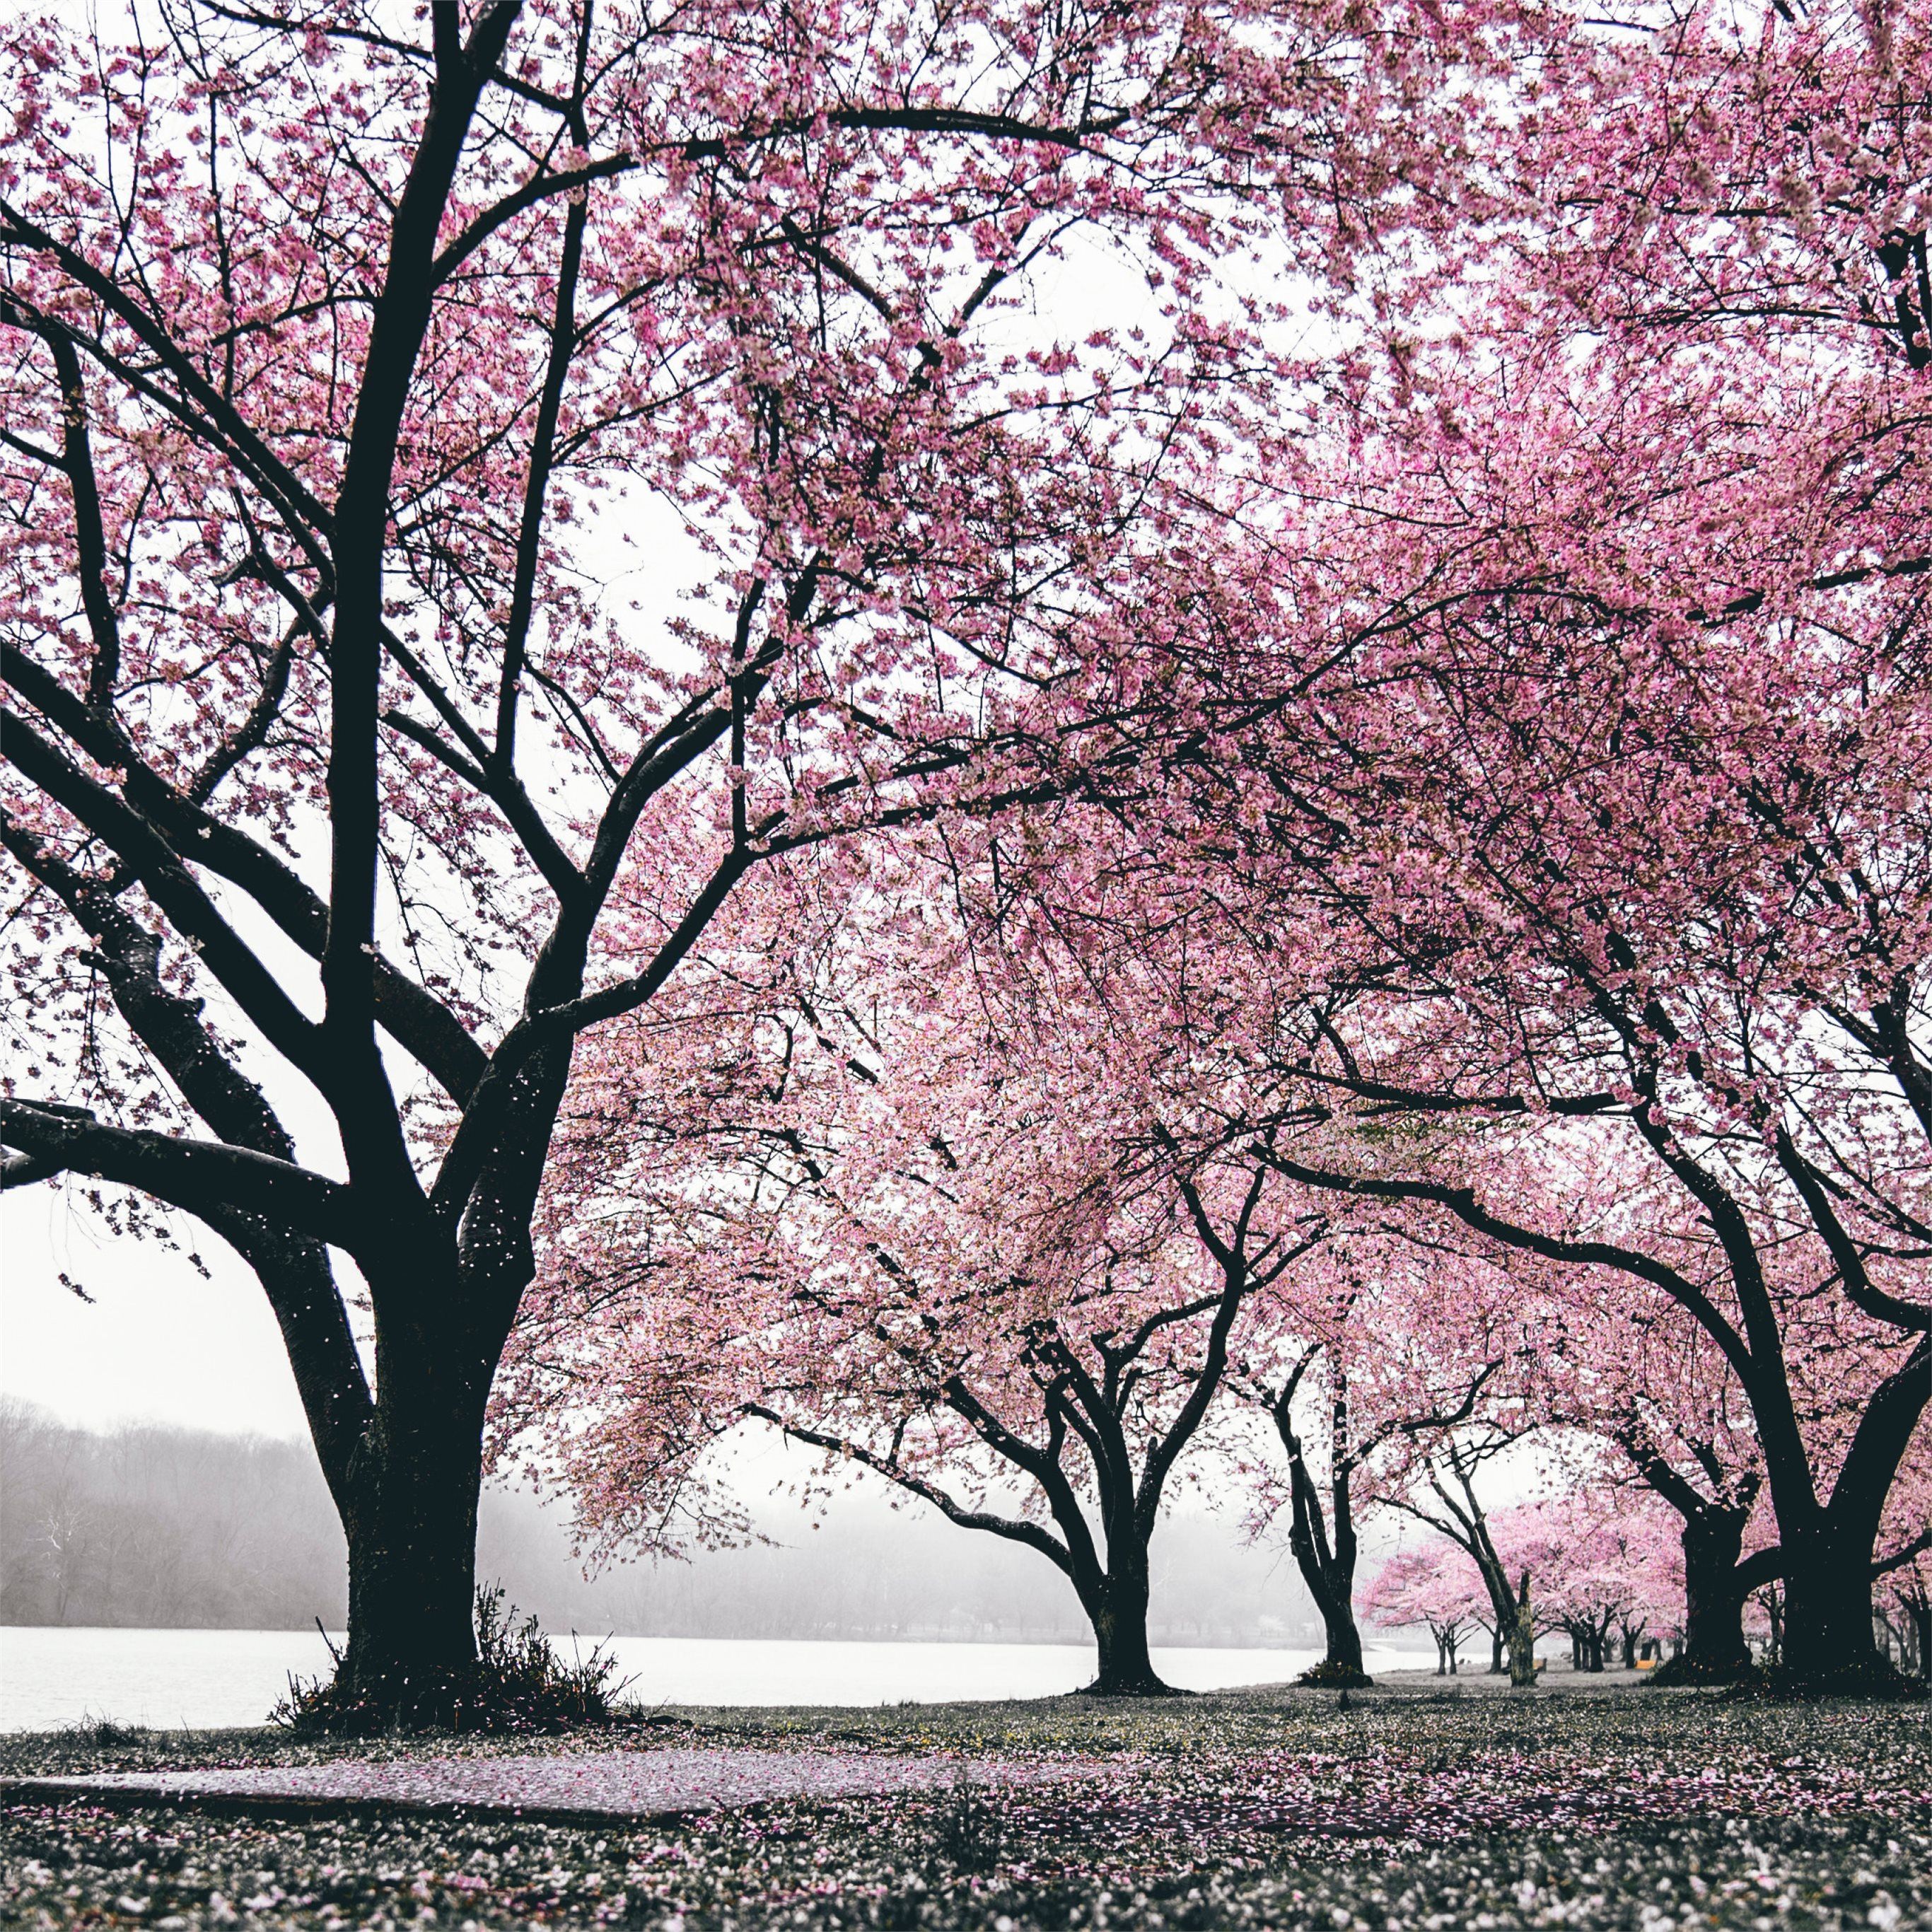 cherry blossoms trees 4k iPad Pro Wallpaper Free Download